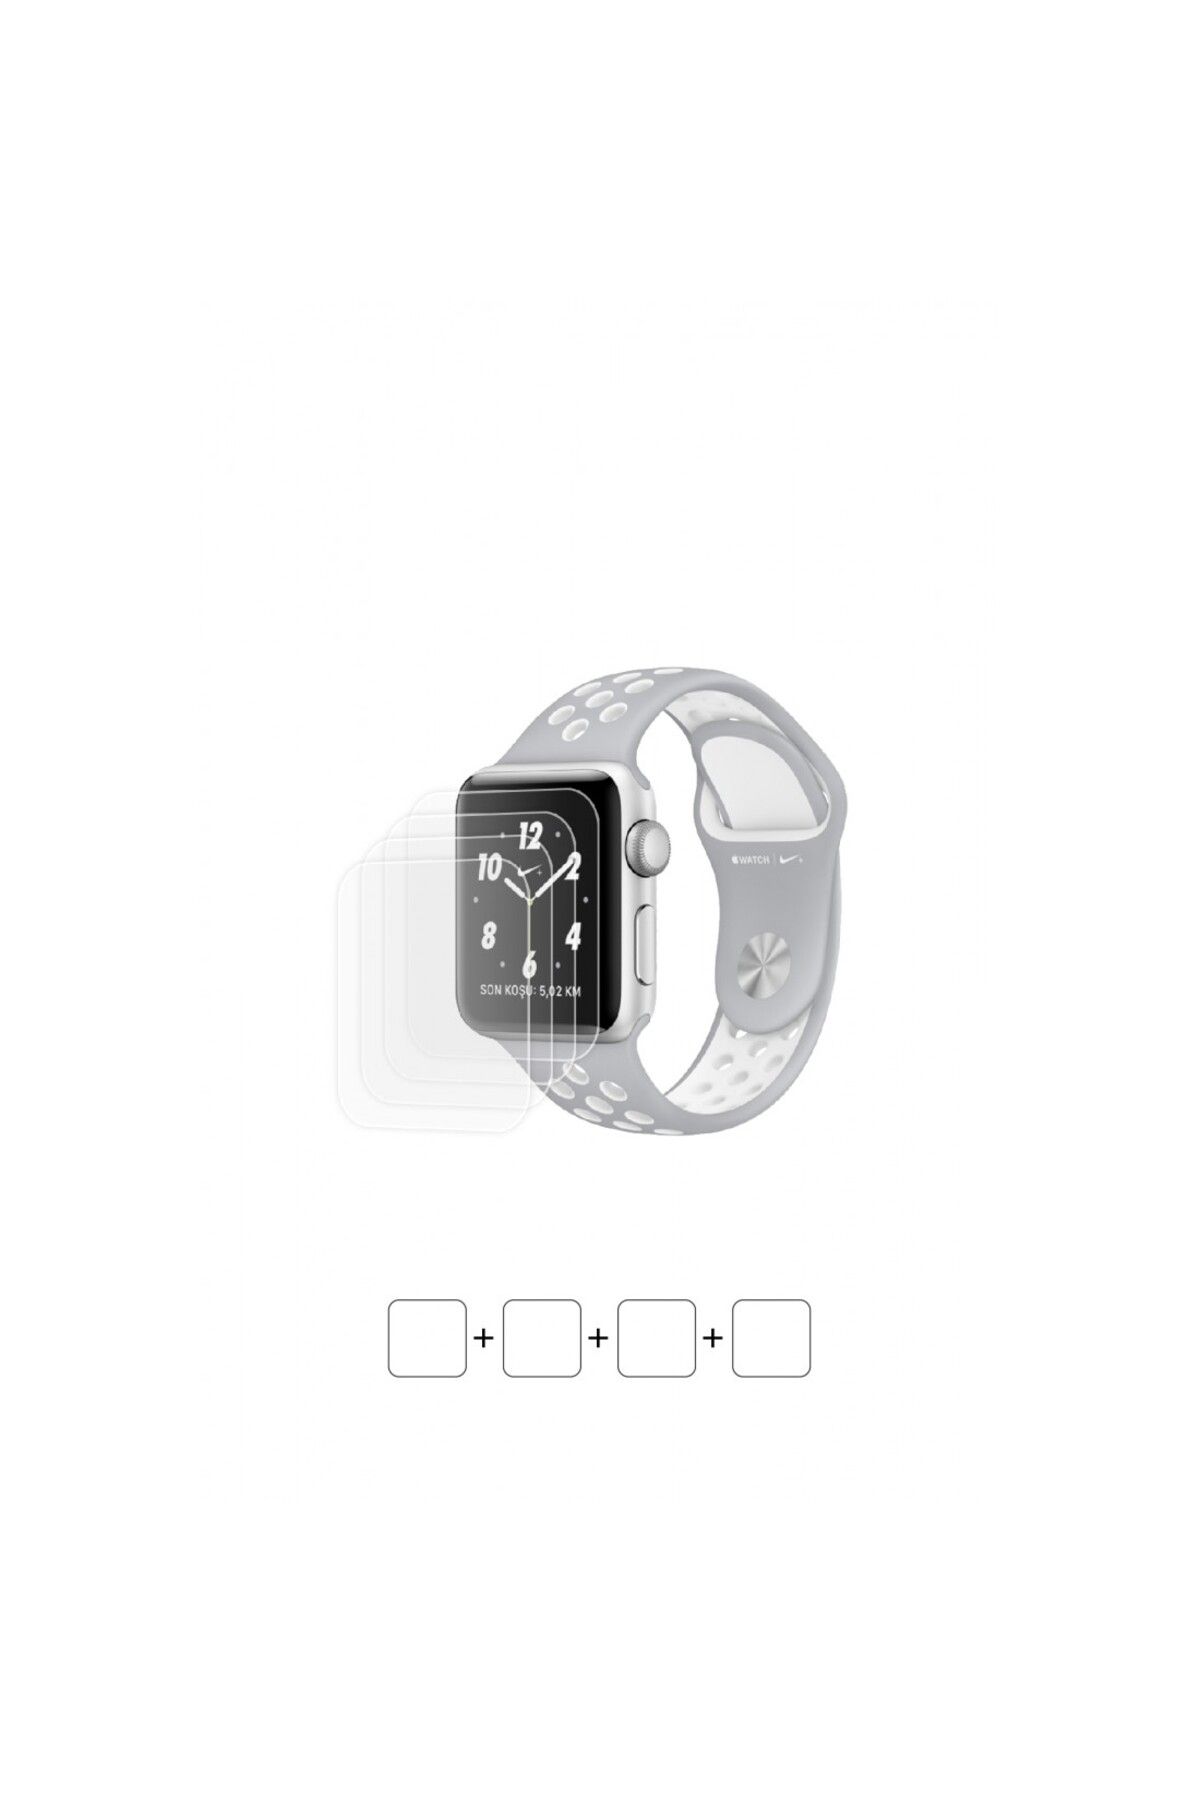 Wrapsol Apple Watch Nike Plus Series 2 38 mm Akıllı Saat Ekran Koruyucu Poliüretan Film